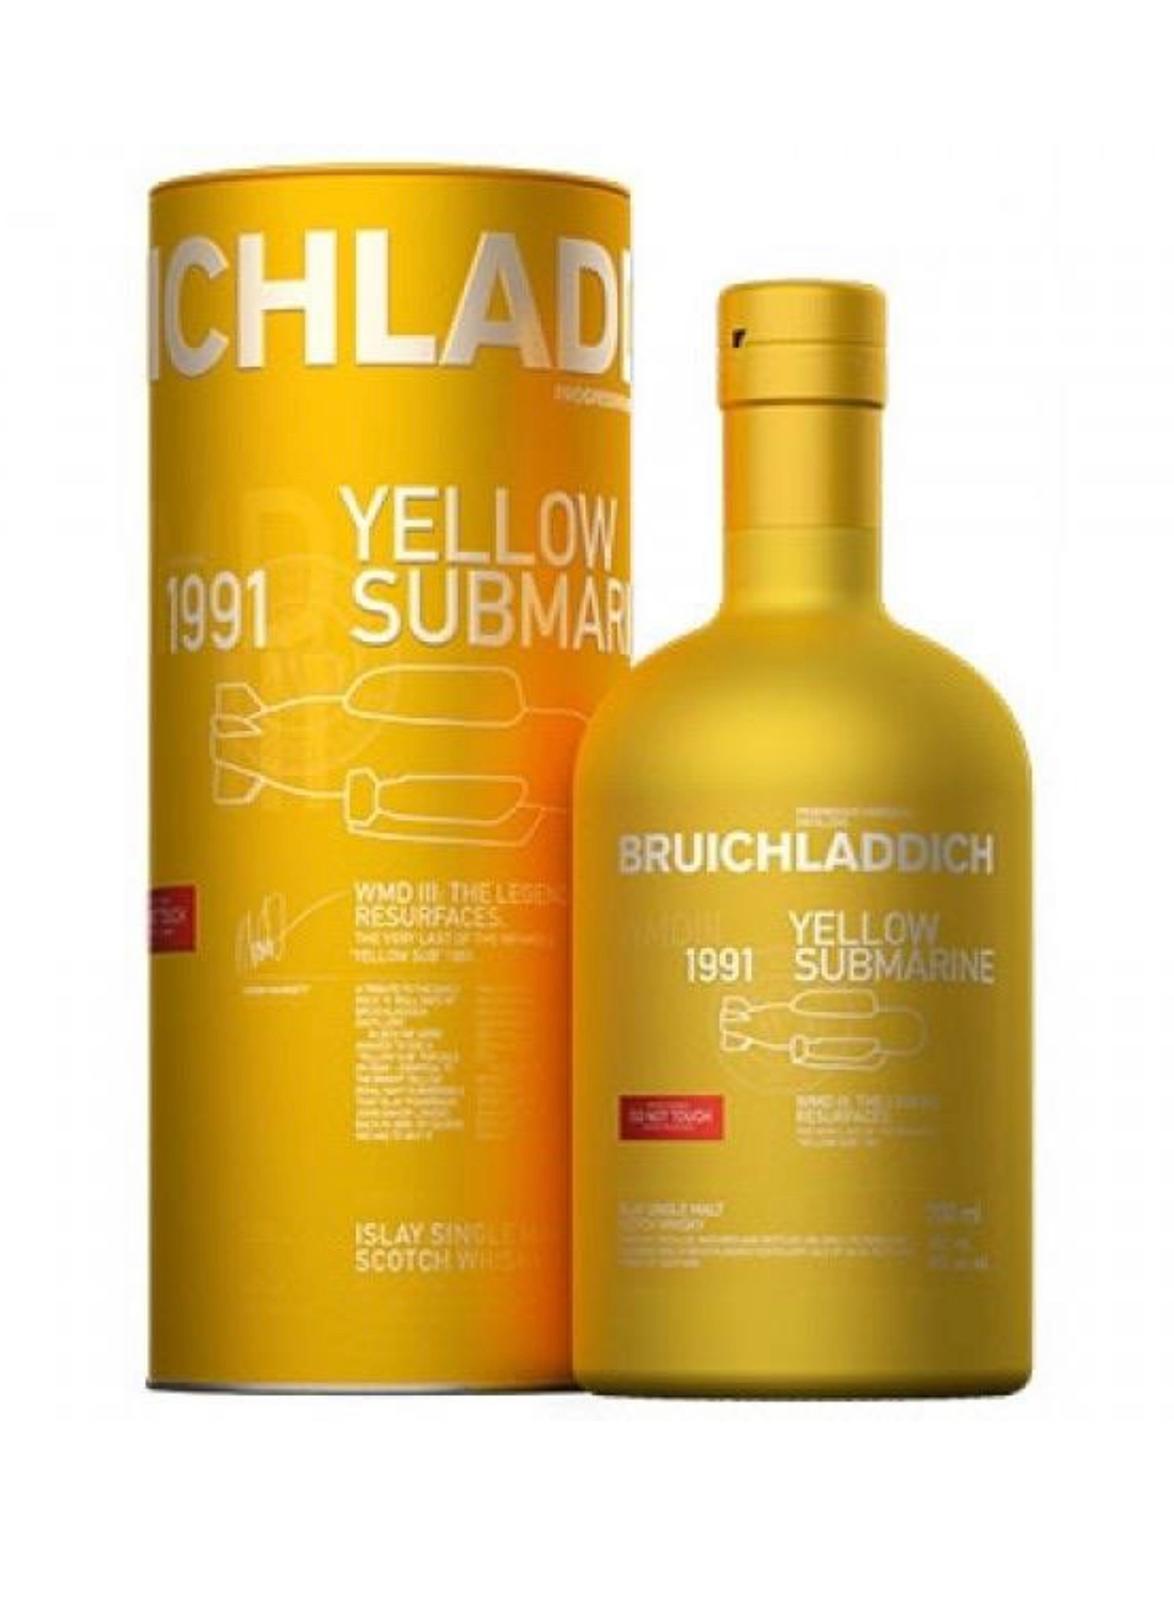 Rare - Bruichladdich Yellow Submarine 1991 WMD III: The Legend Resurfaces 70cl 46%